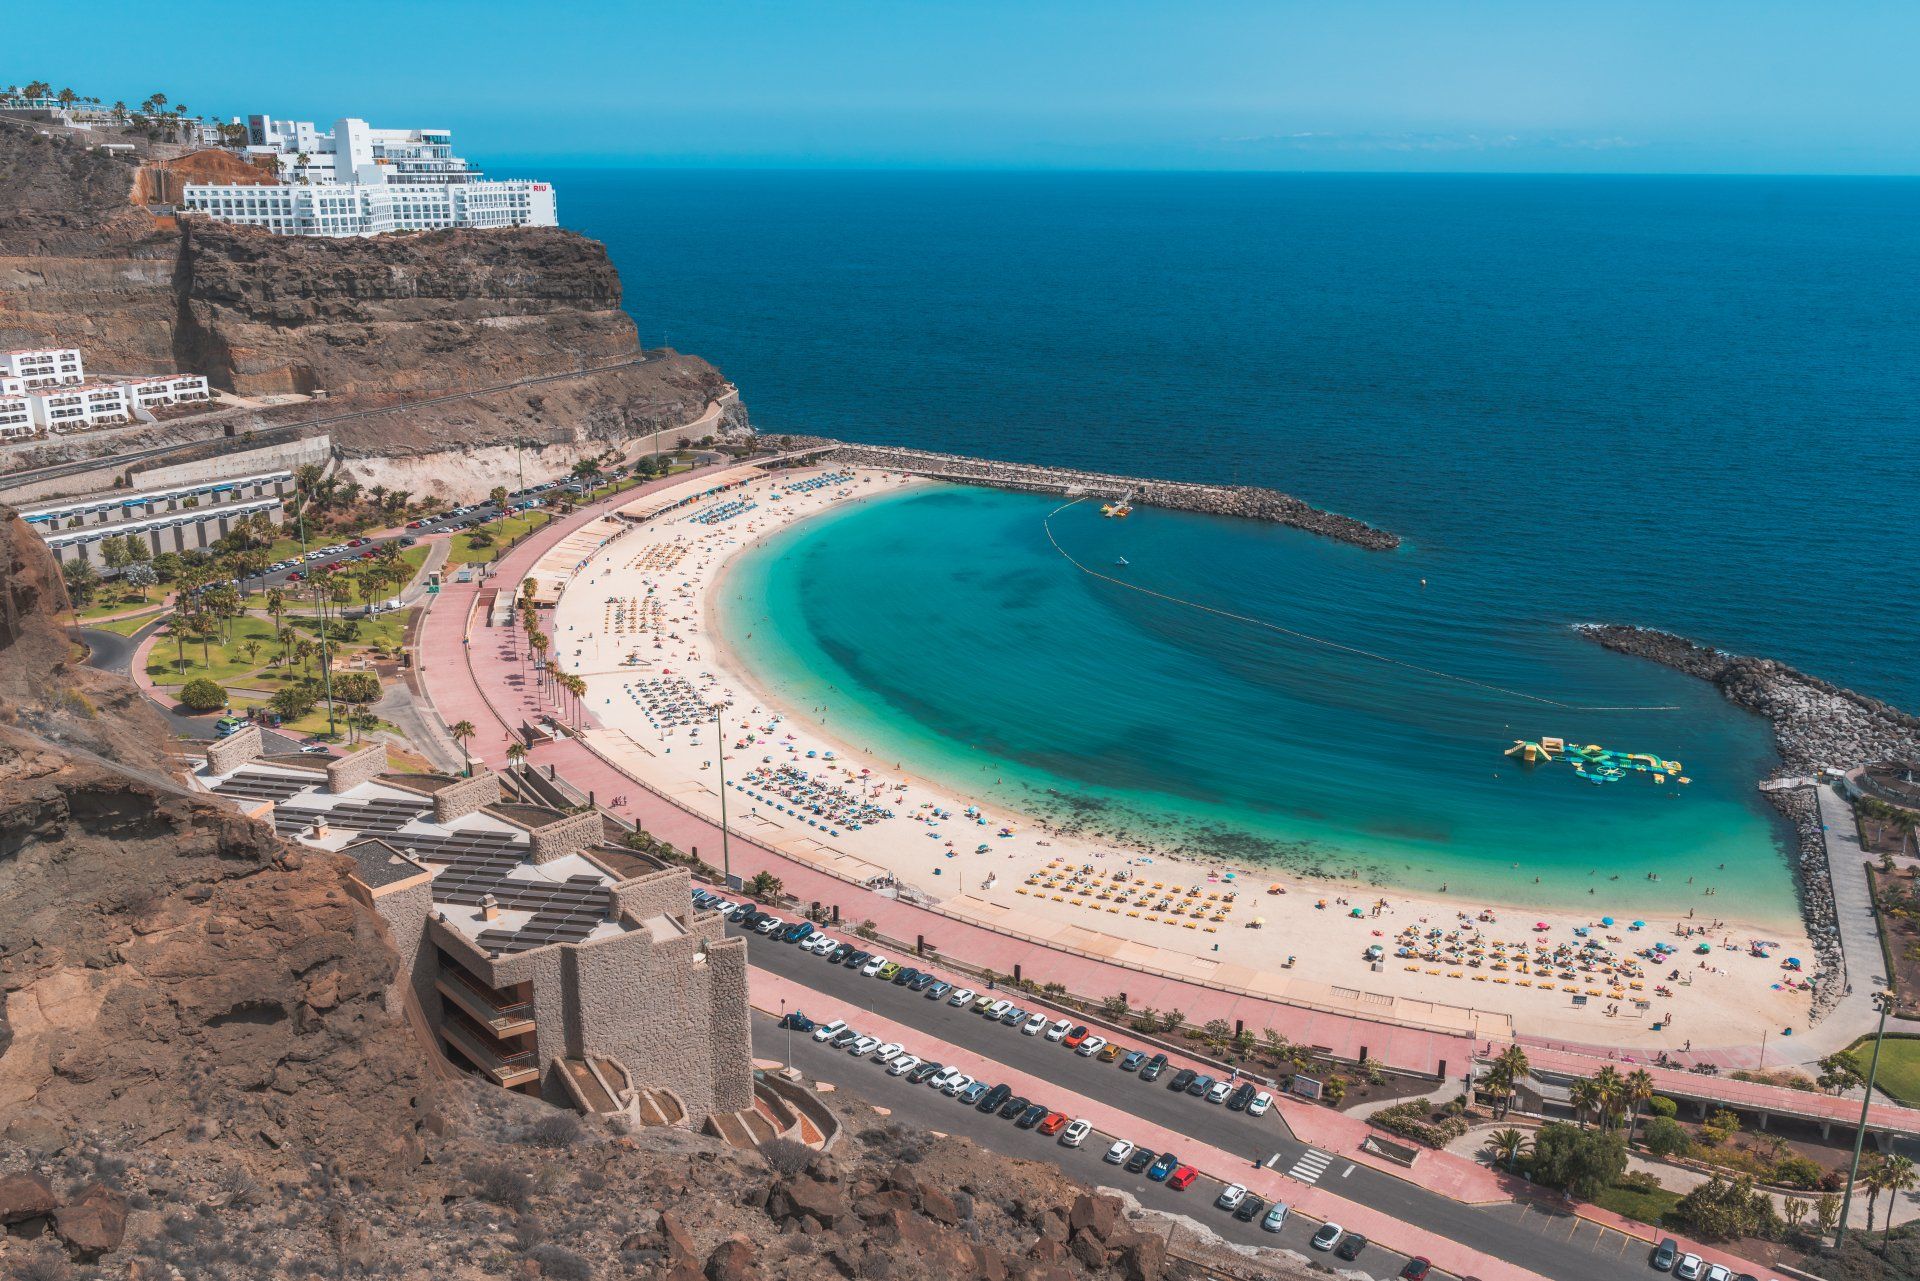 Puerto Rico de Gran Canaria Resort, South-West Coast of the Spanish Island of Gran Canaria, Spain - Gran Canaria Holidays Barter's Travelnet